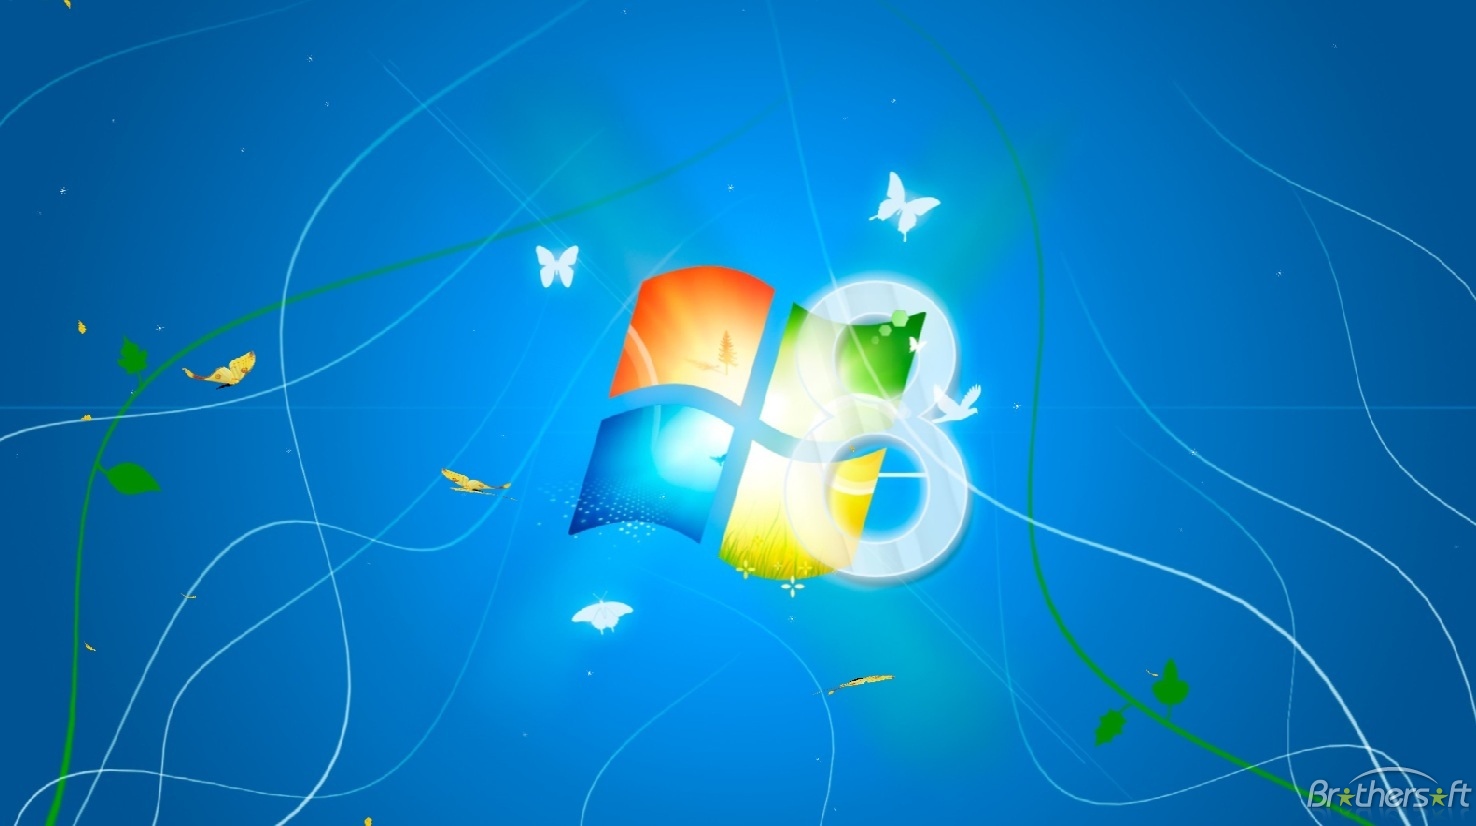 38+] Animated Wallpaper on Windows 10 - WallpaperSafari